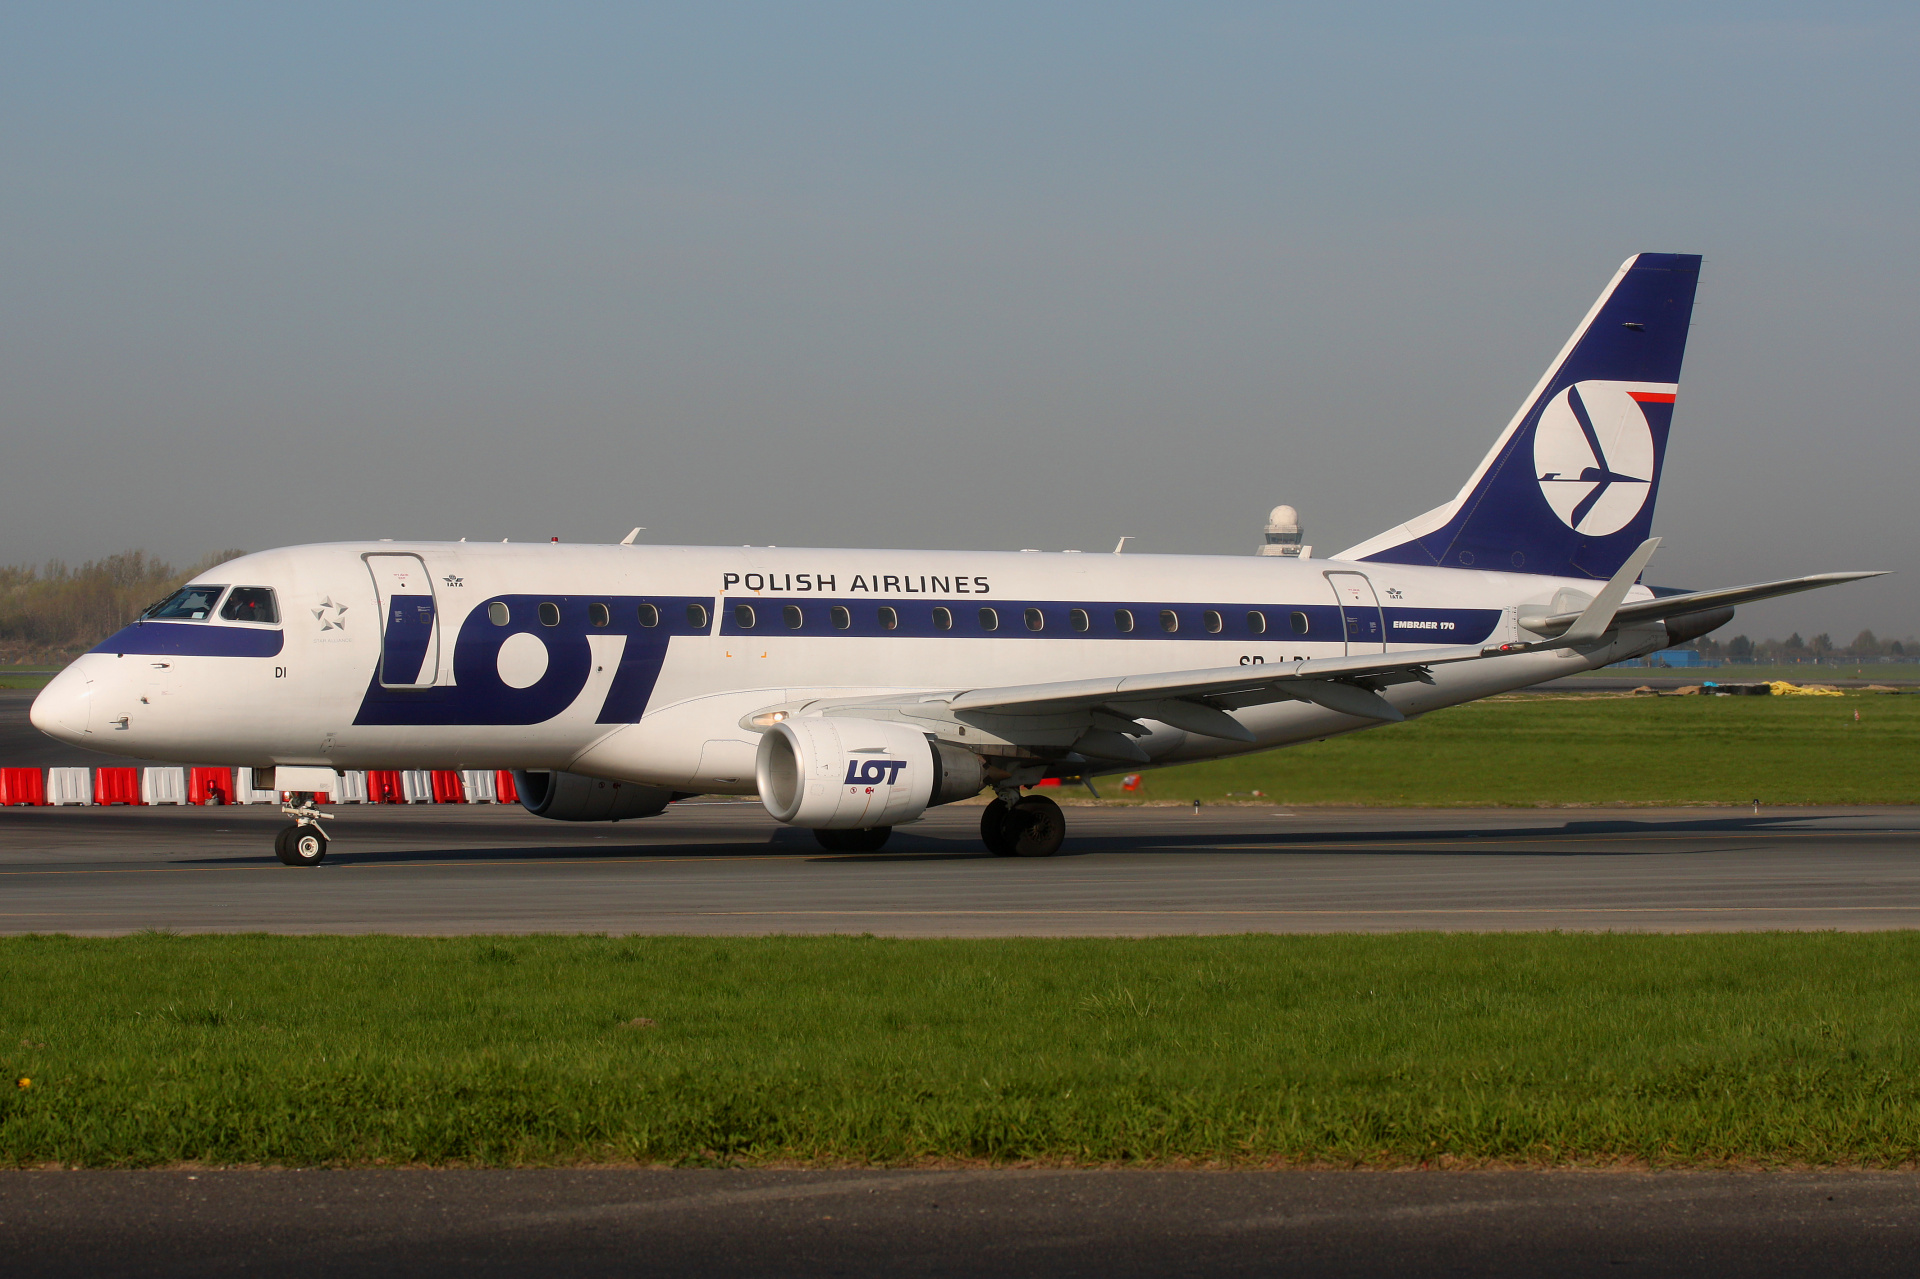 SP-LDI (Aircraft » EPWA Spotting » Embraer E170 » LOT Polish Airlines)